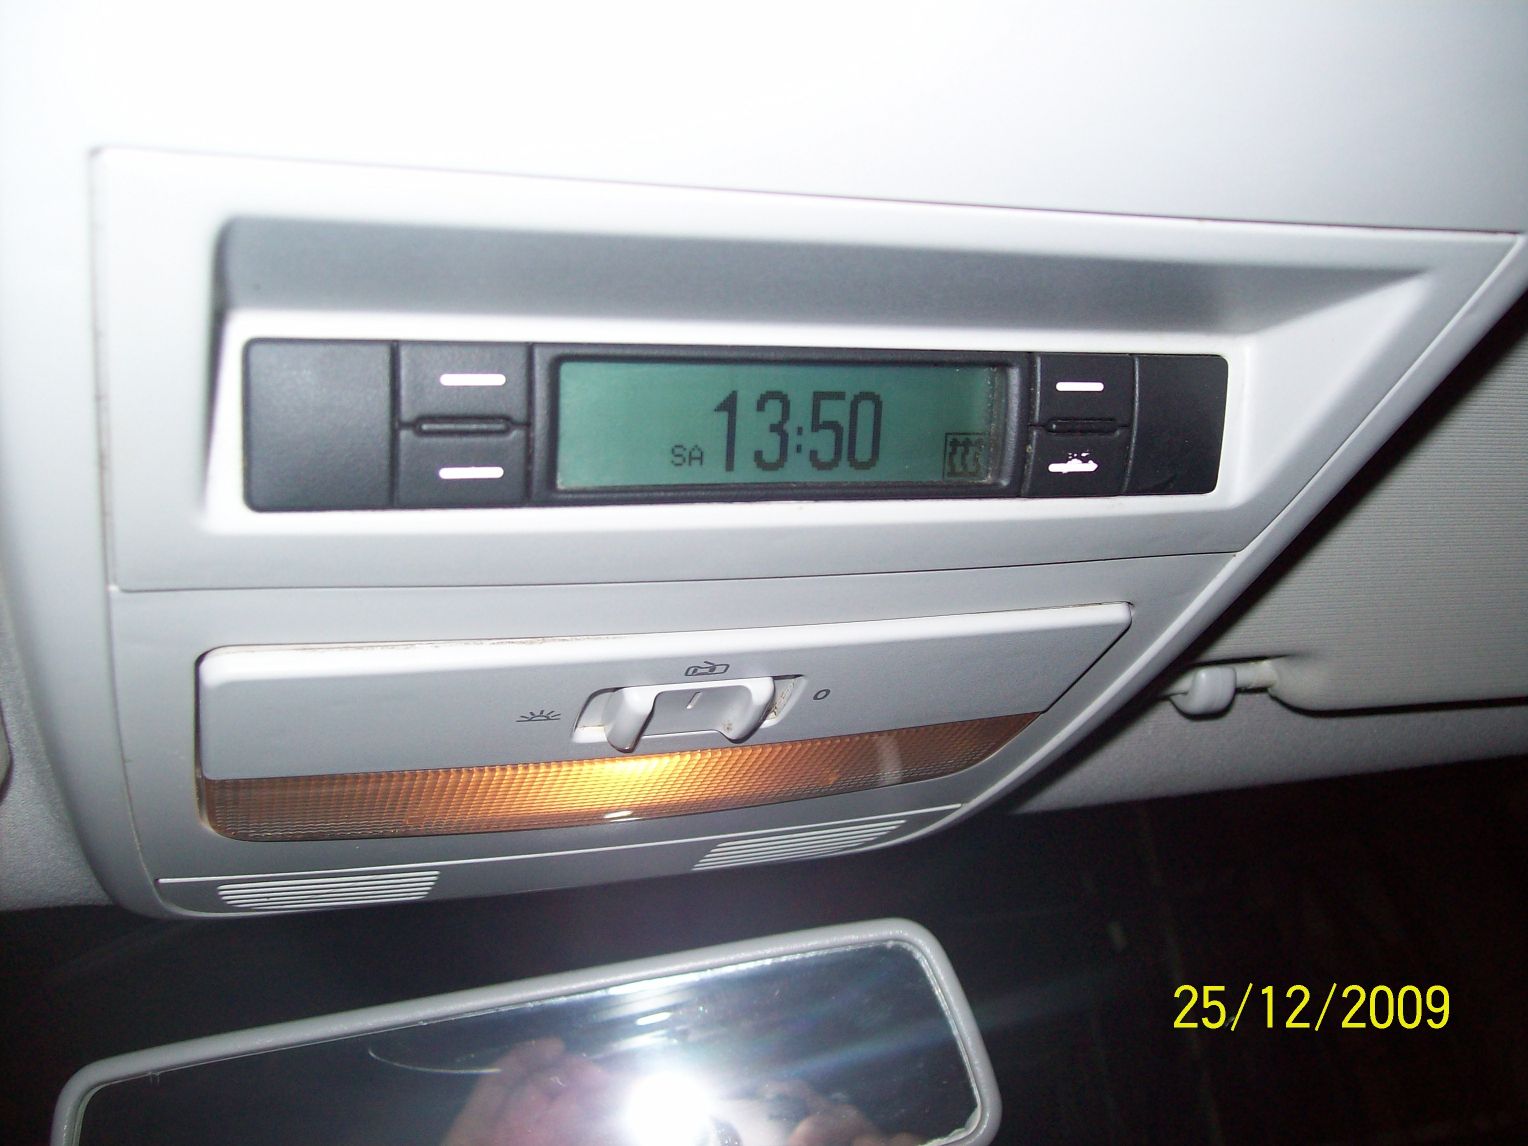 VW Transporter T5 2003 r Webasto Thermo Top C elektroda.pl